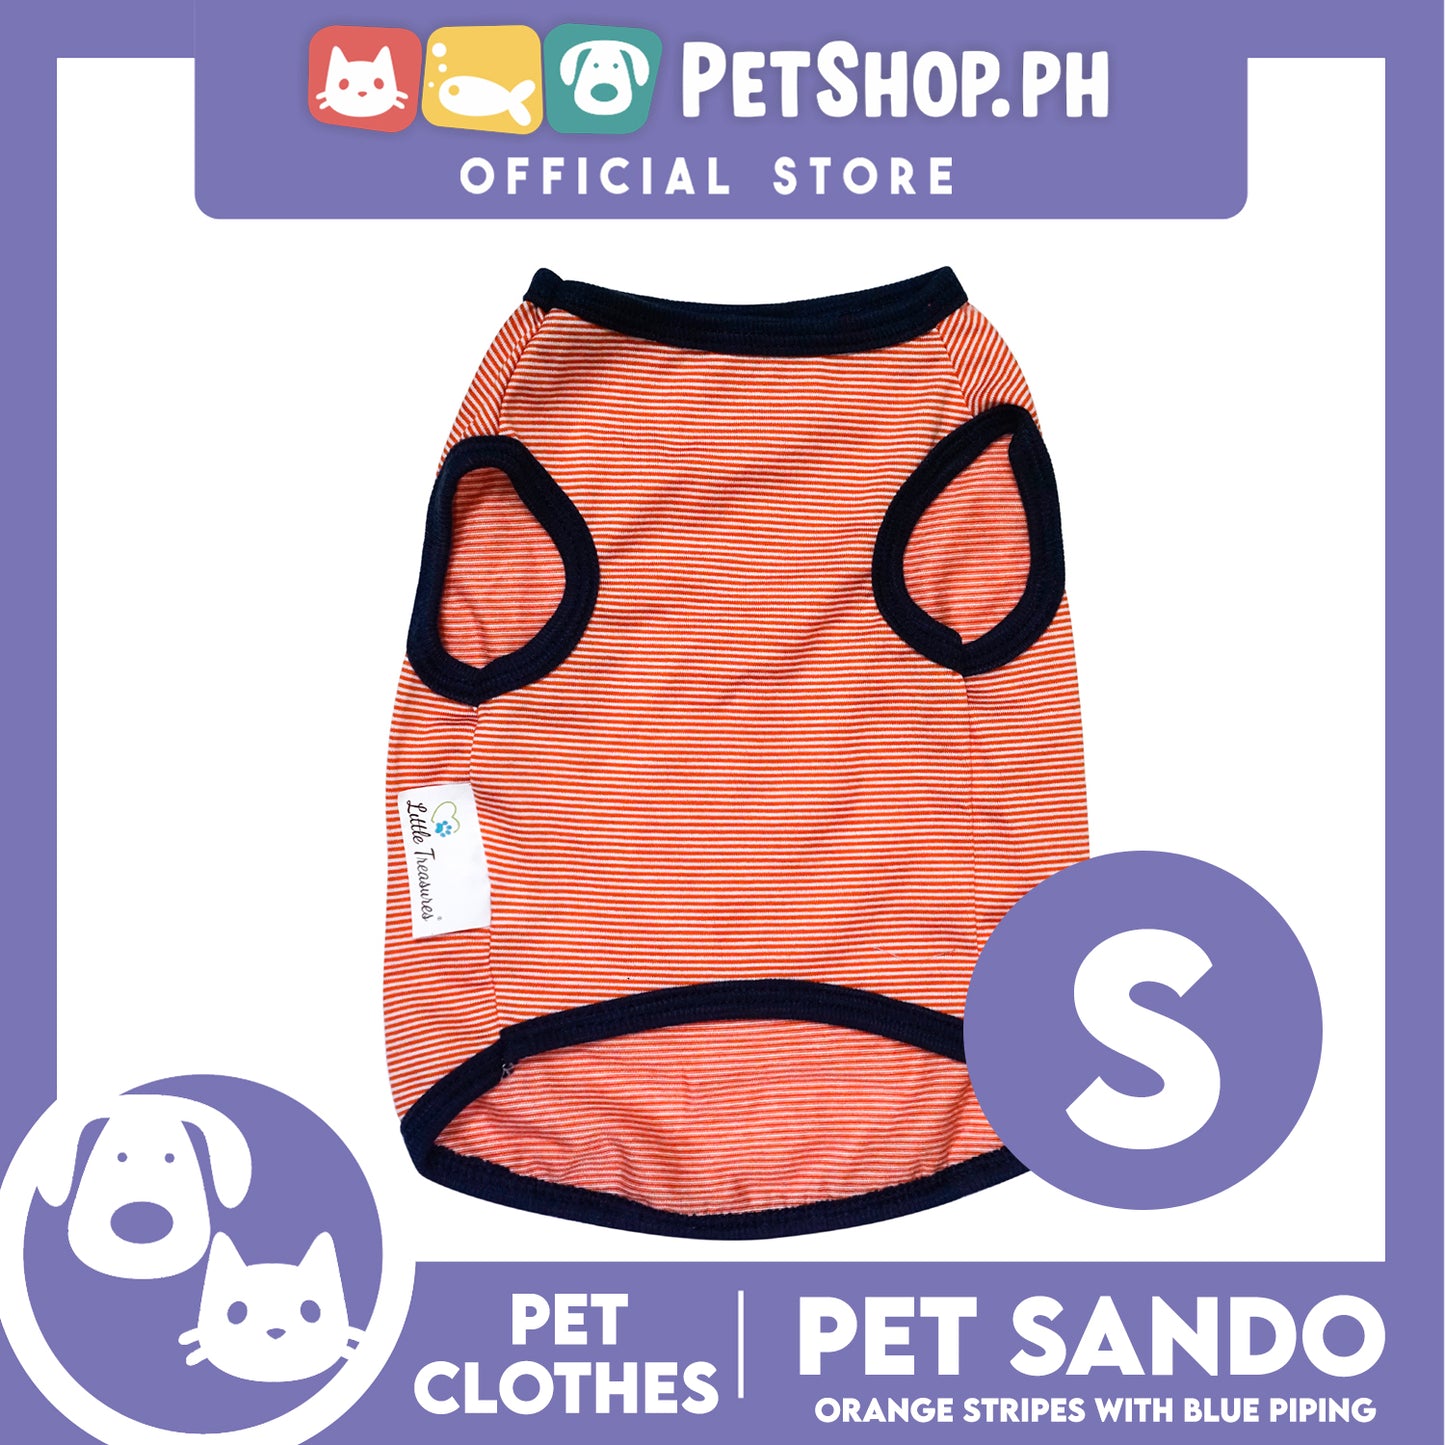 Pet Sando Orange Stripes with Blue Piping (Small) Pet Shirt Clothes Dress